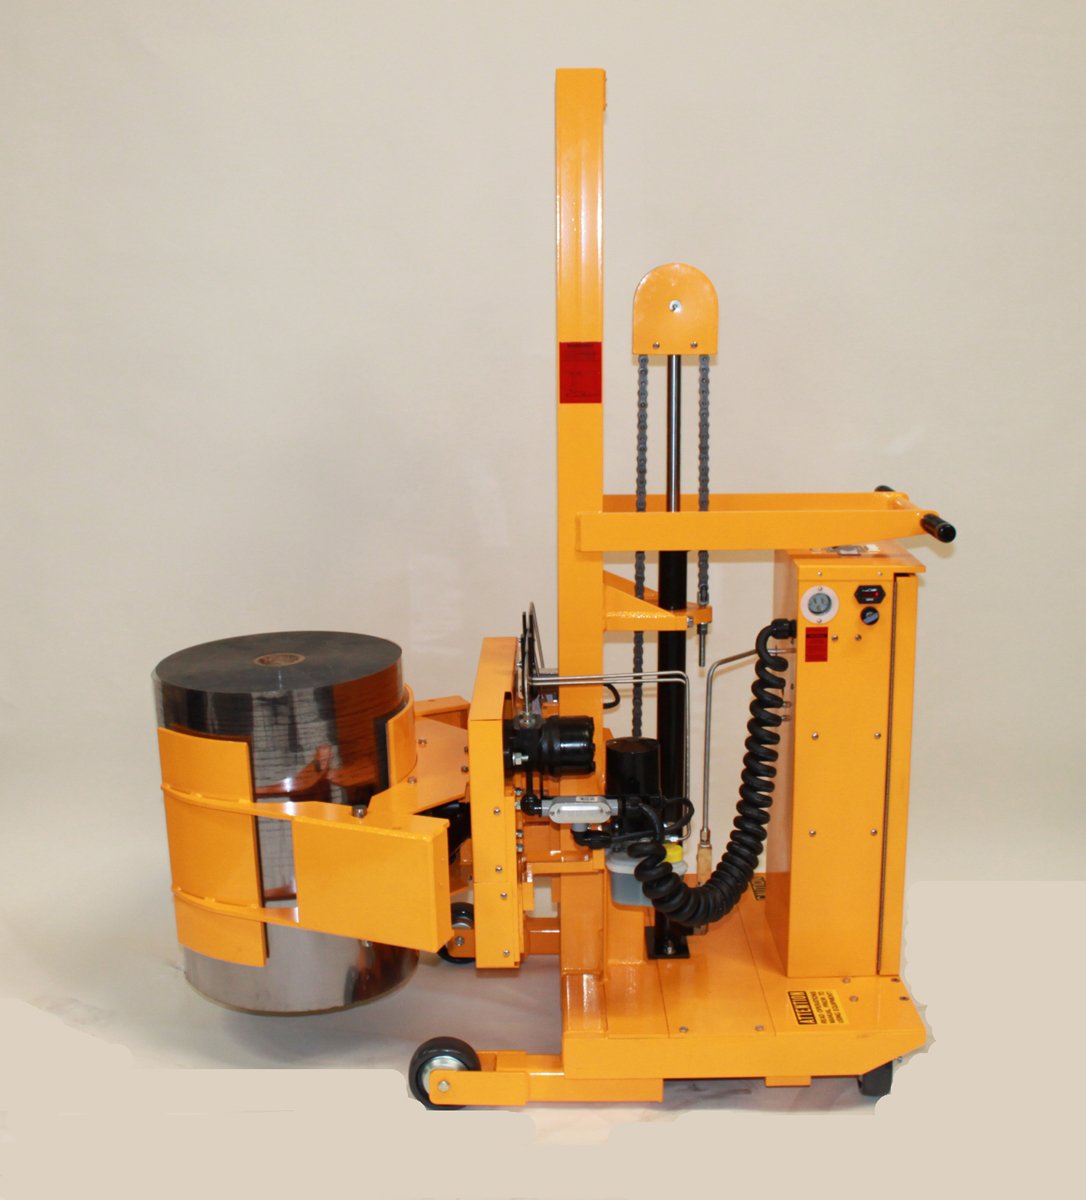 EasyLift Roll Manipulators Capacities to 500 lb/227 kg